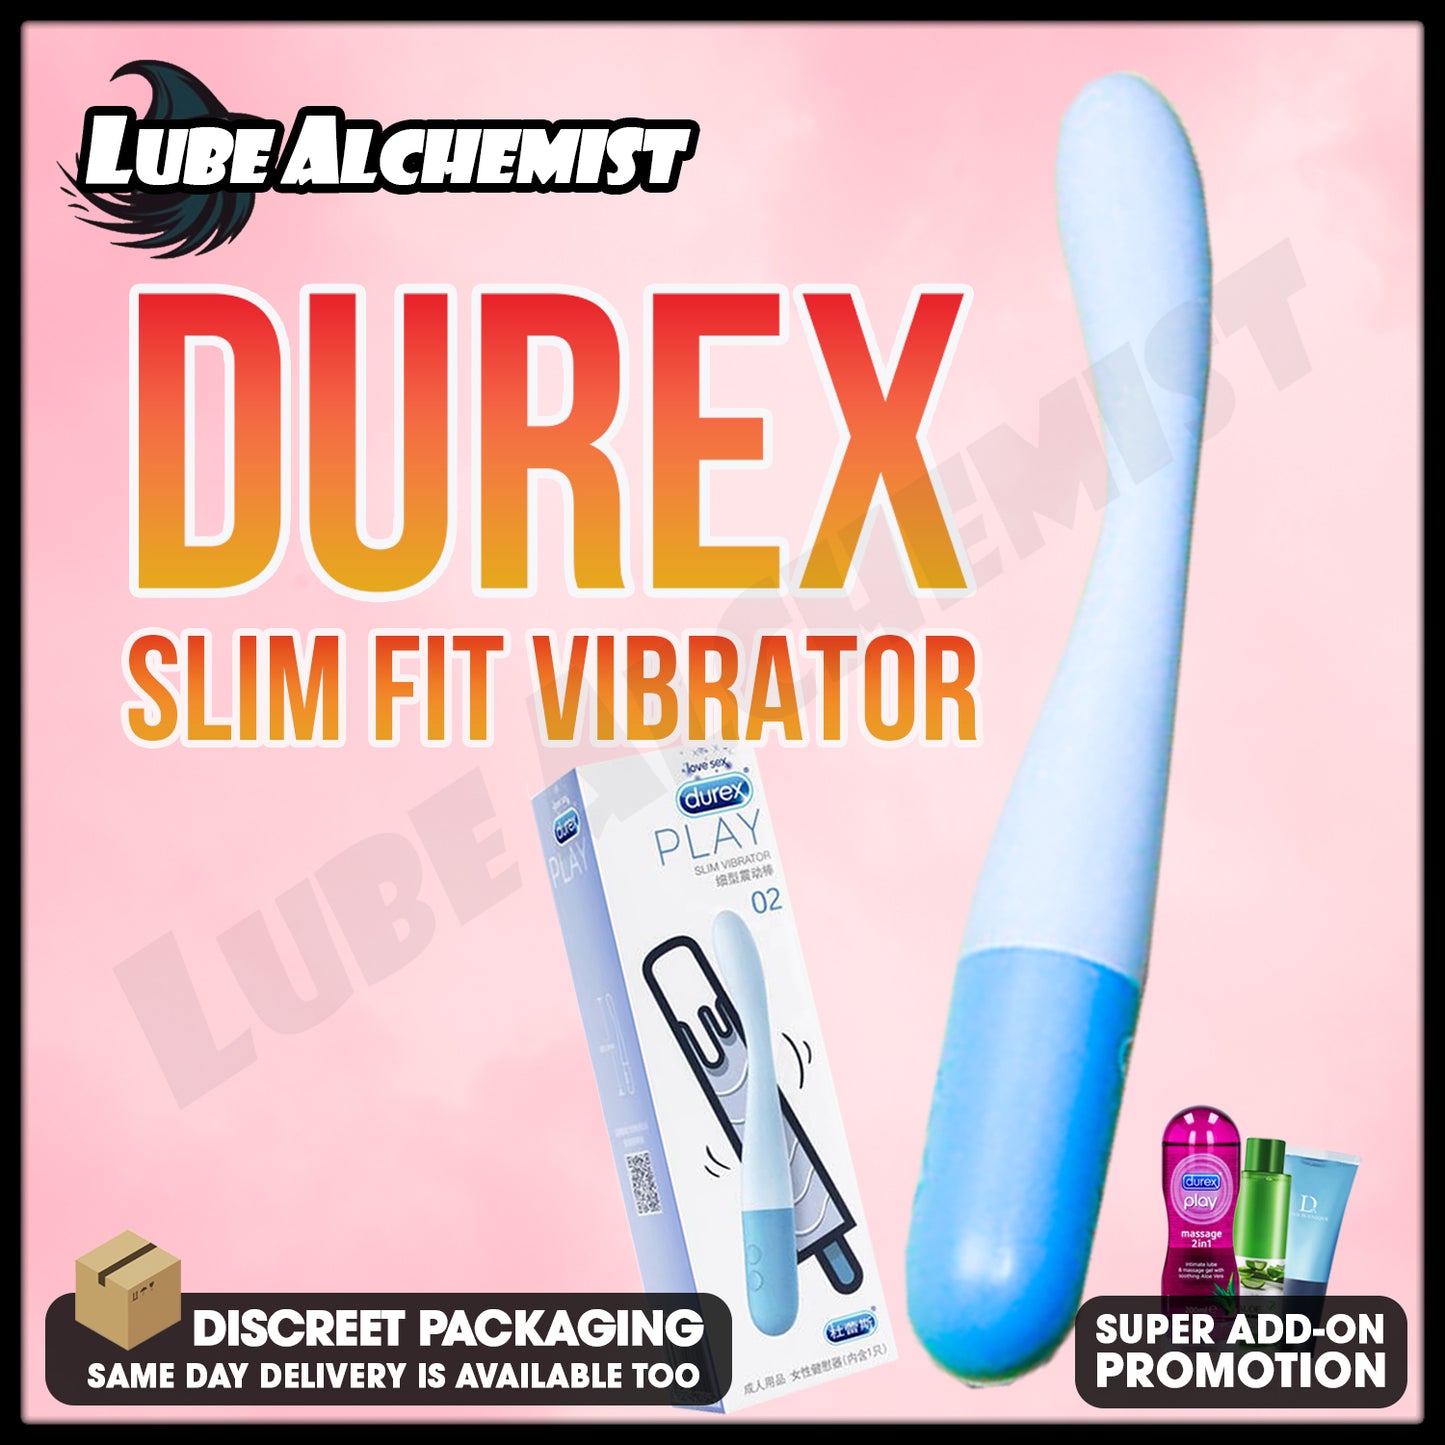 LubeAlchemist™ Durex Slim Fit Vibrator